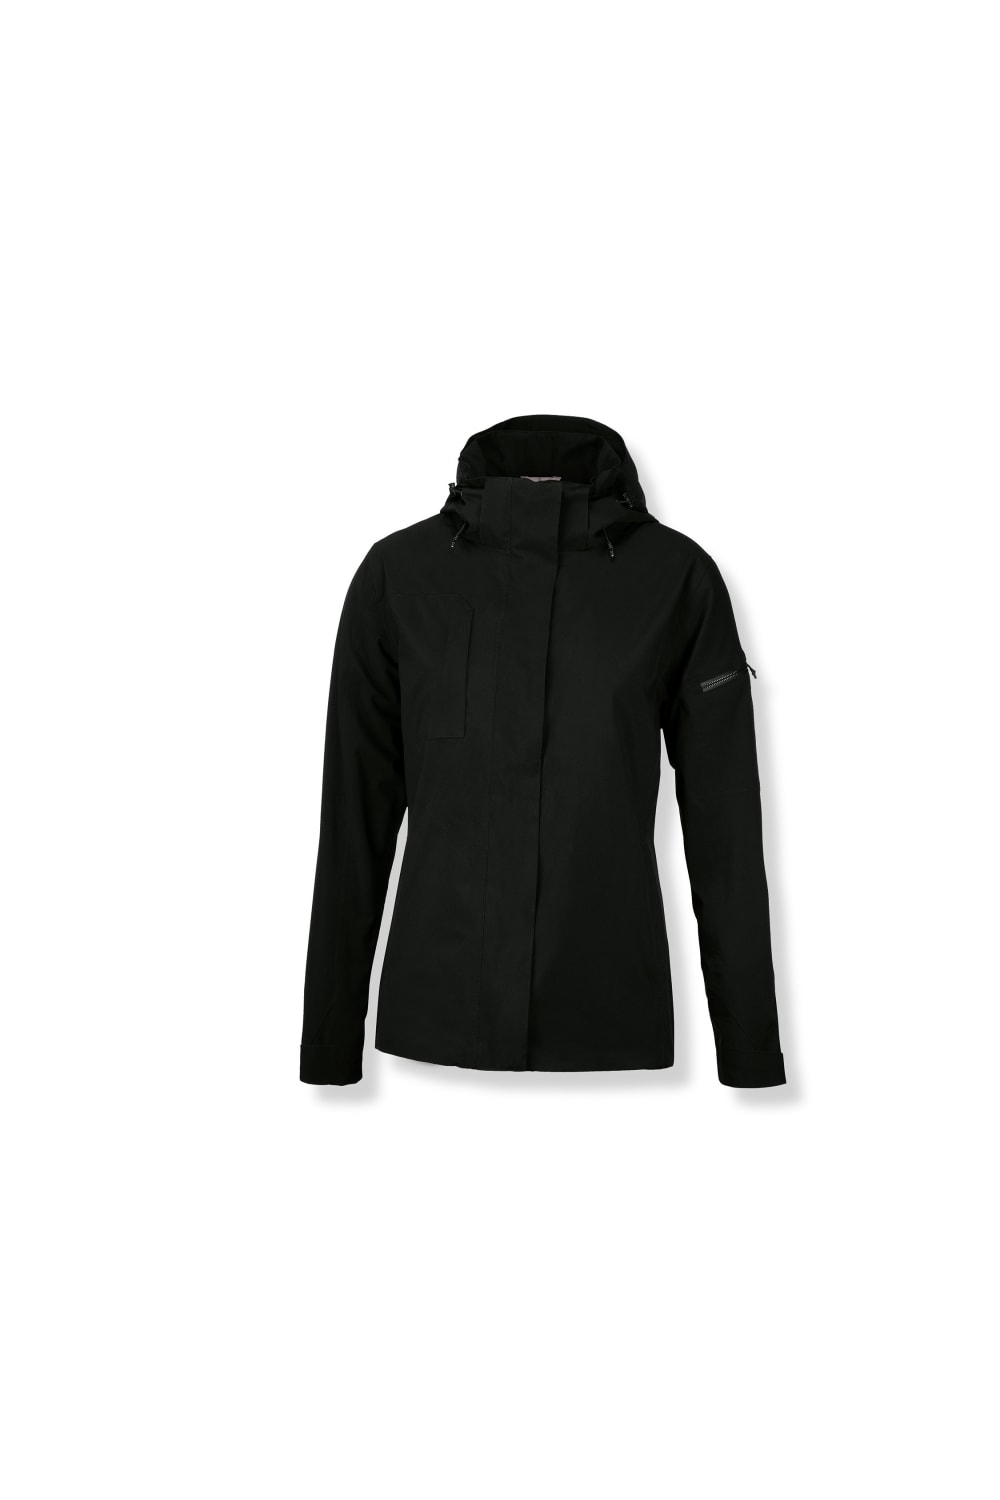 Nimbus Womens/Ladies Whitestone Jacket (Black)